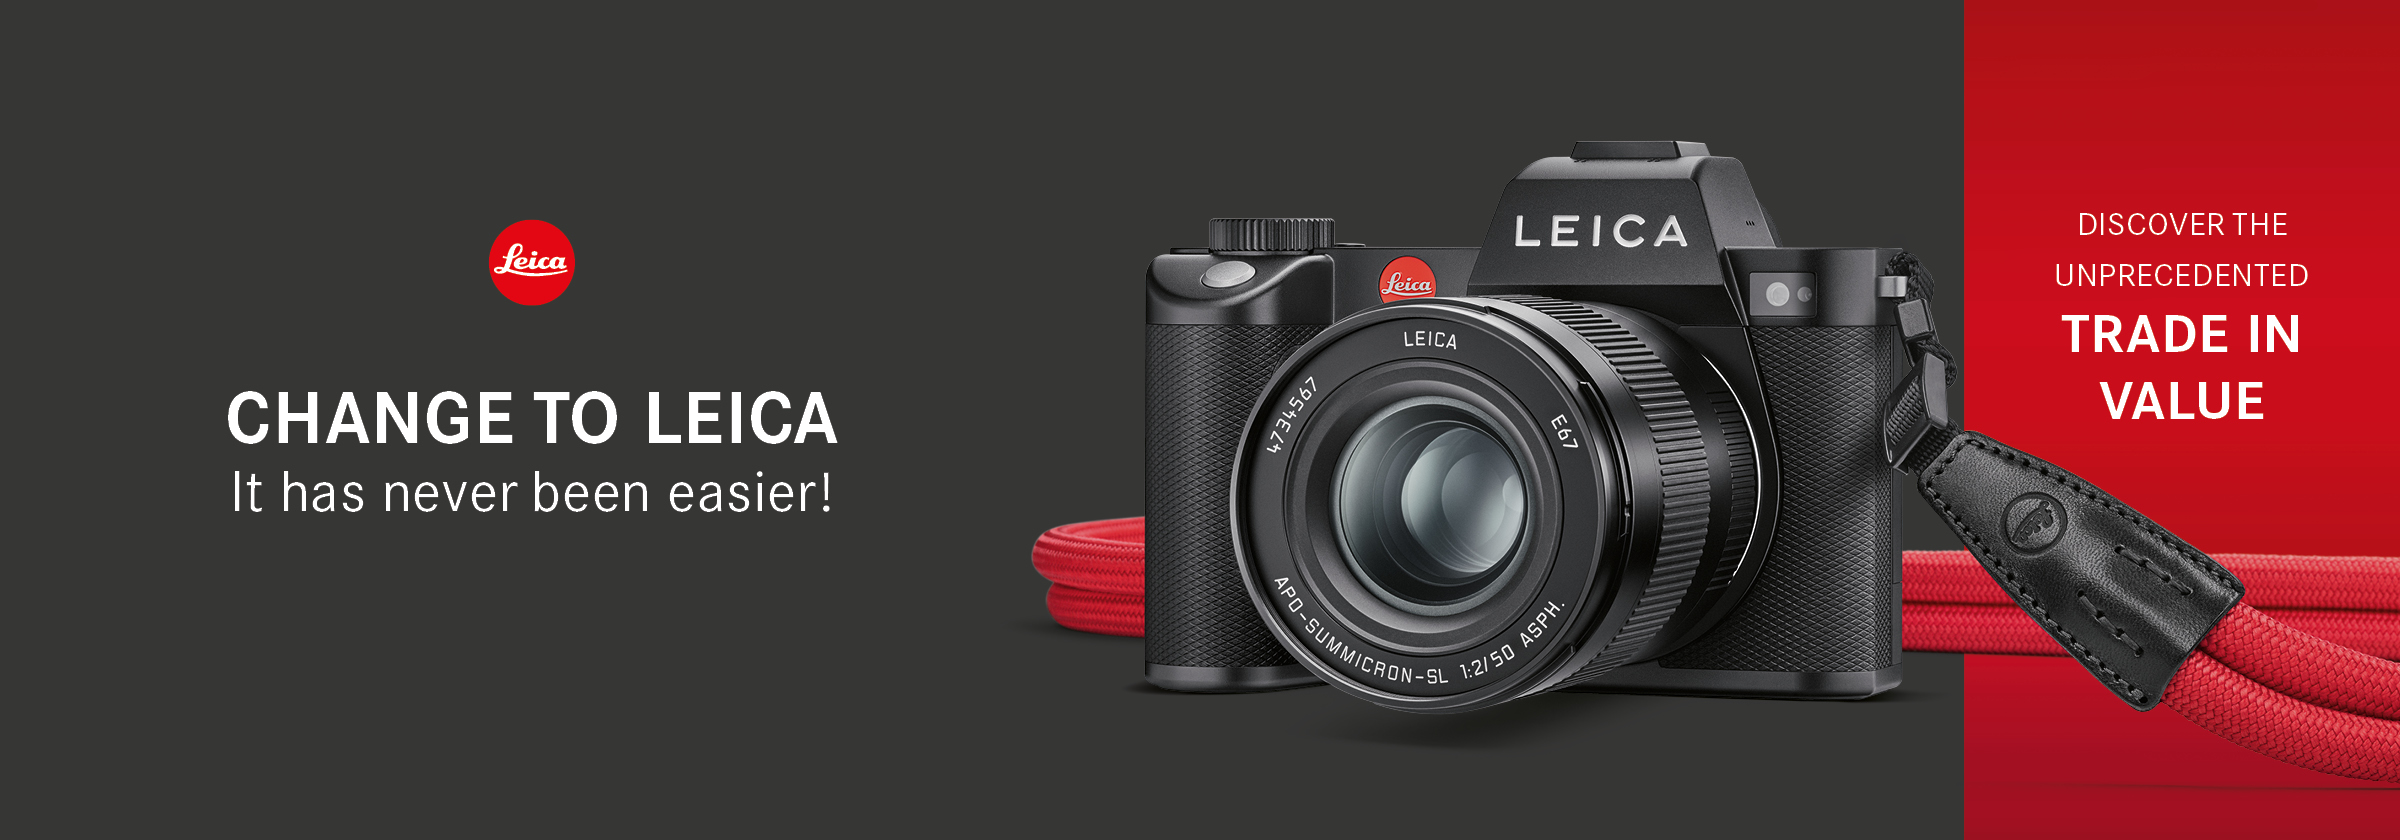 Leicaキャンペーン